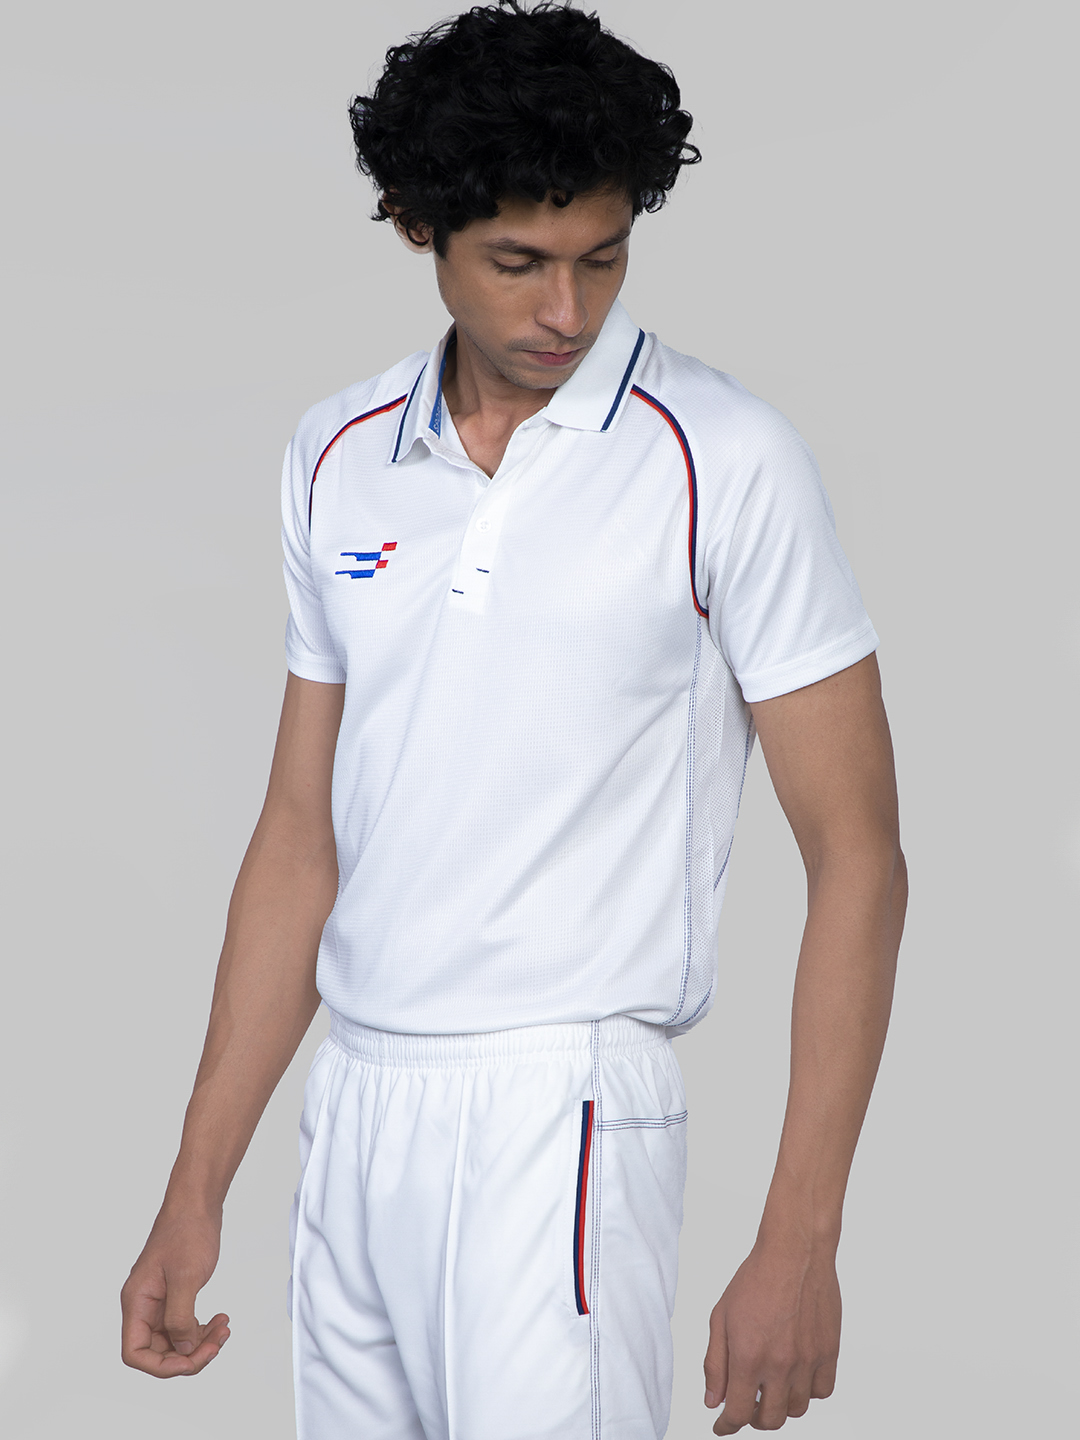 Sportiff Predator Half Sleeves Cricket Shirt – Sportiff Sportswear